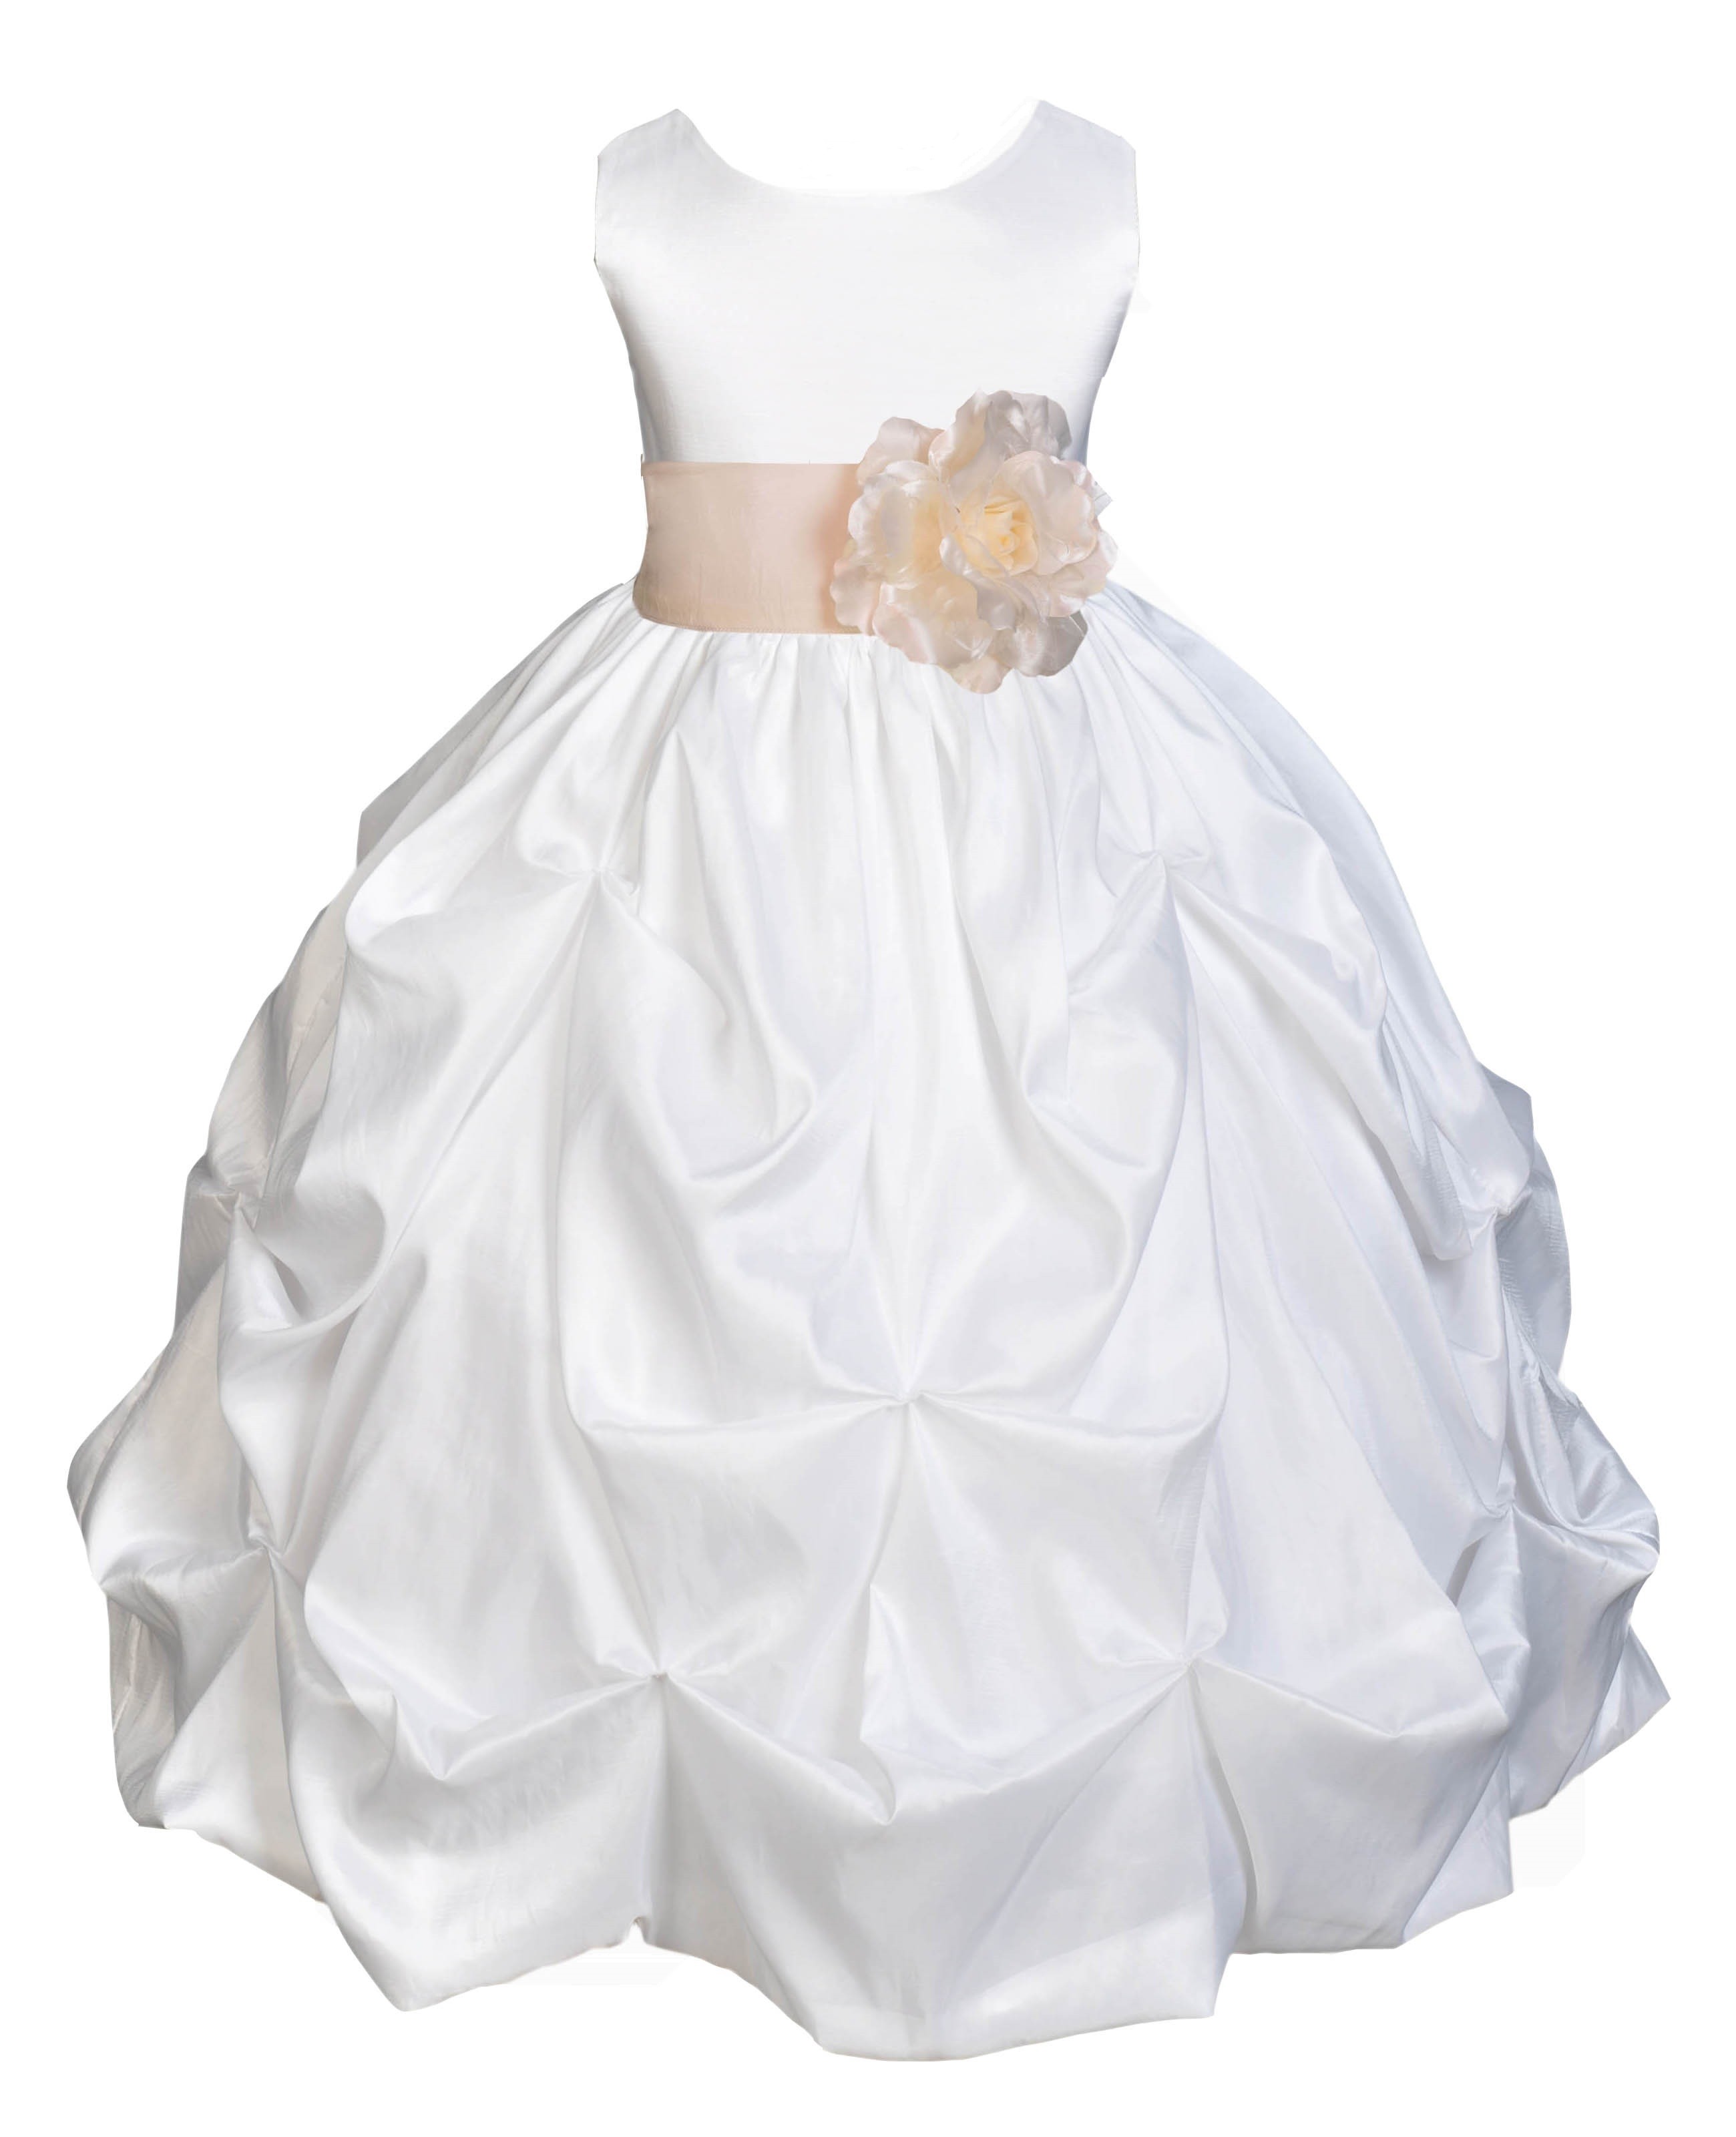 White/Champagne Satin Taffeta Pick-Up Bubble Flower Girl Dress 301S